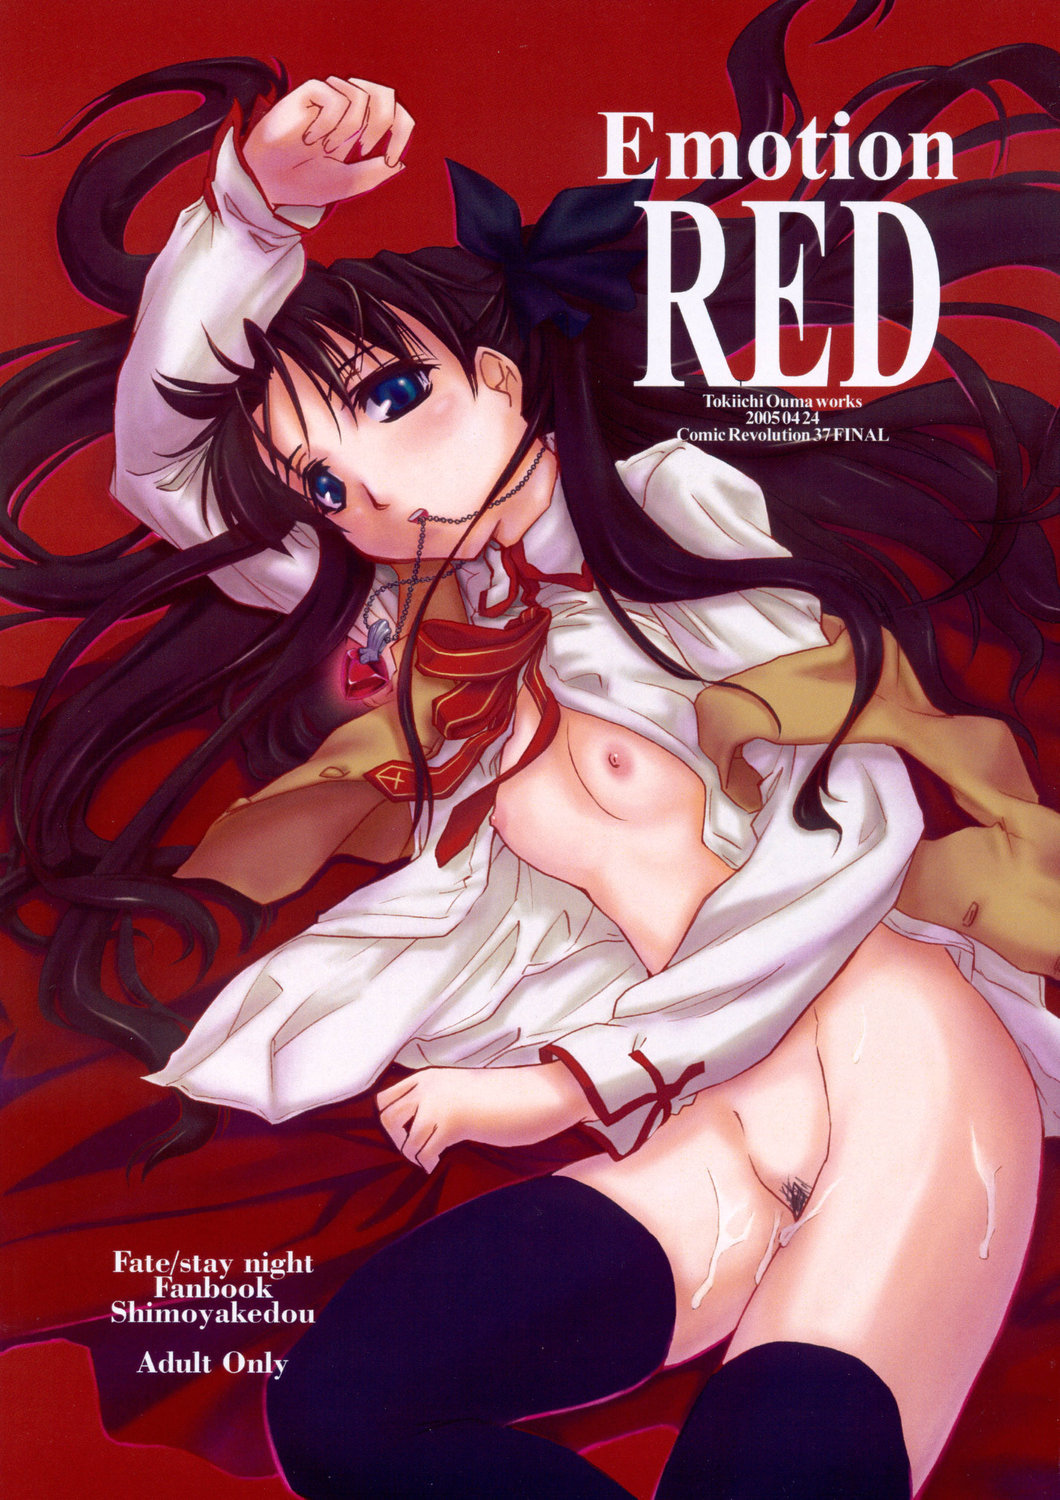 Emotion RED fate stay night hentai manga